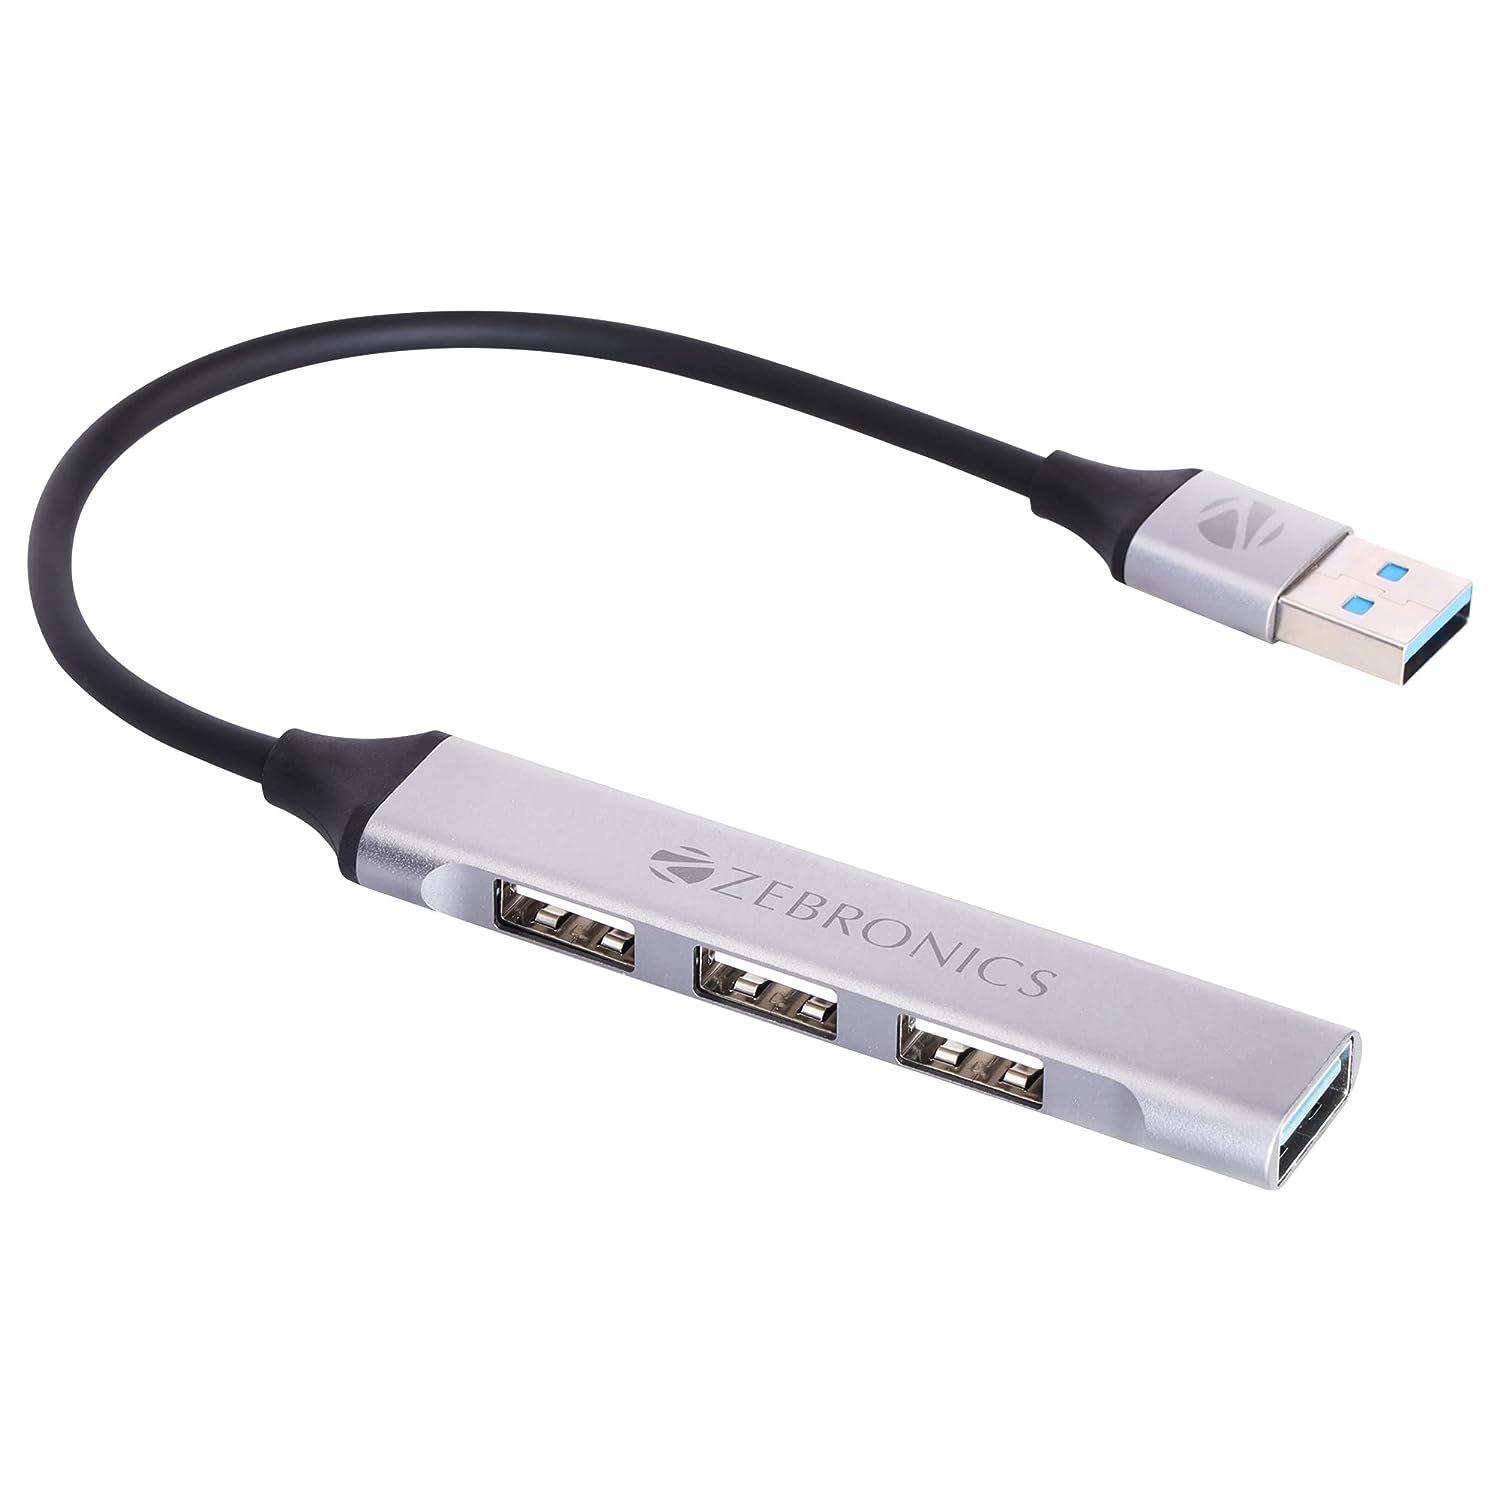 Zebronics 200HB USB 3.0 4 Port hub with Hi Speed Data Transfer, Aluminum + ABS Body, 15cm Cable, Sleek Design and Plug Play Usage